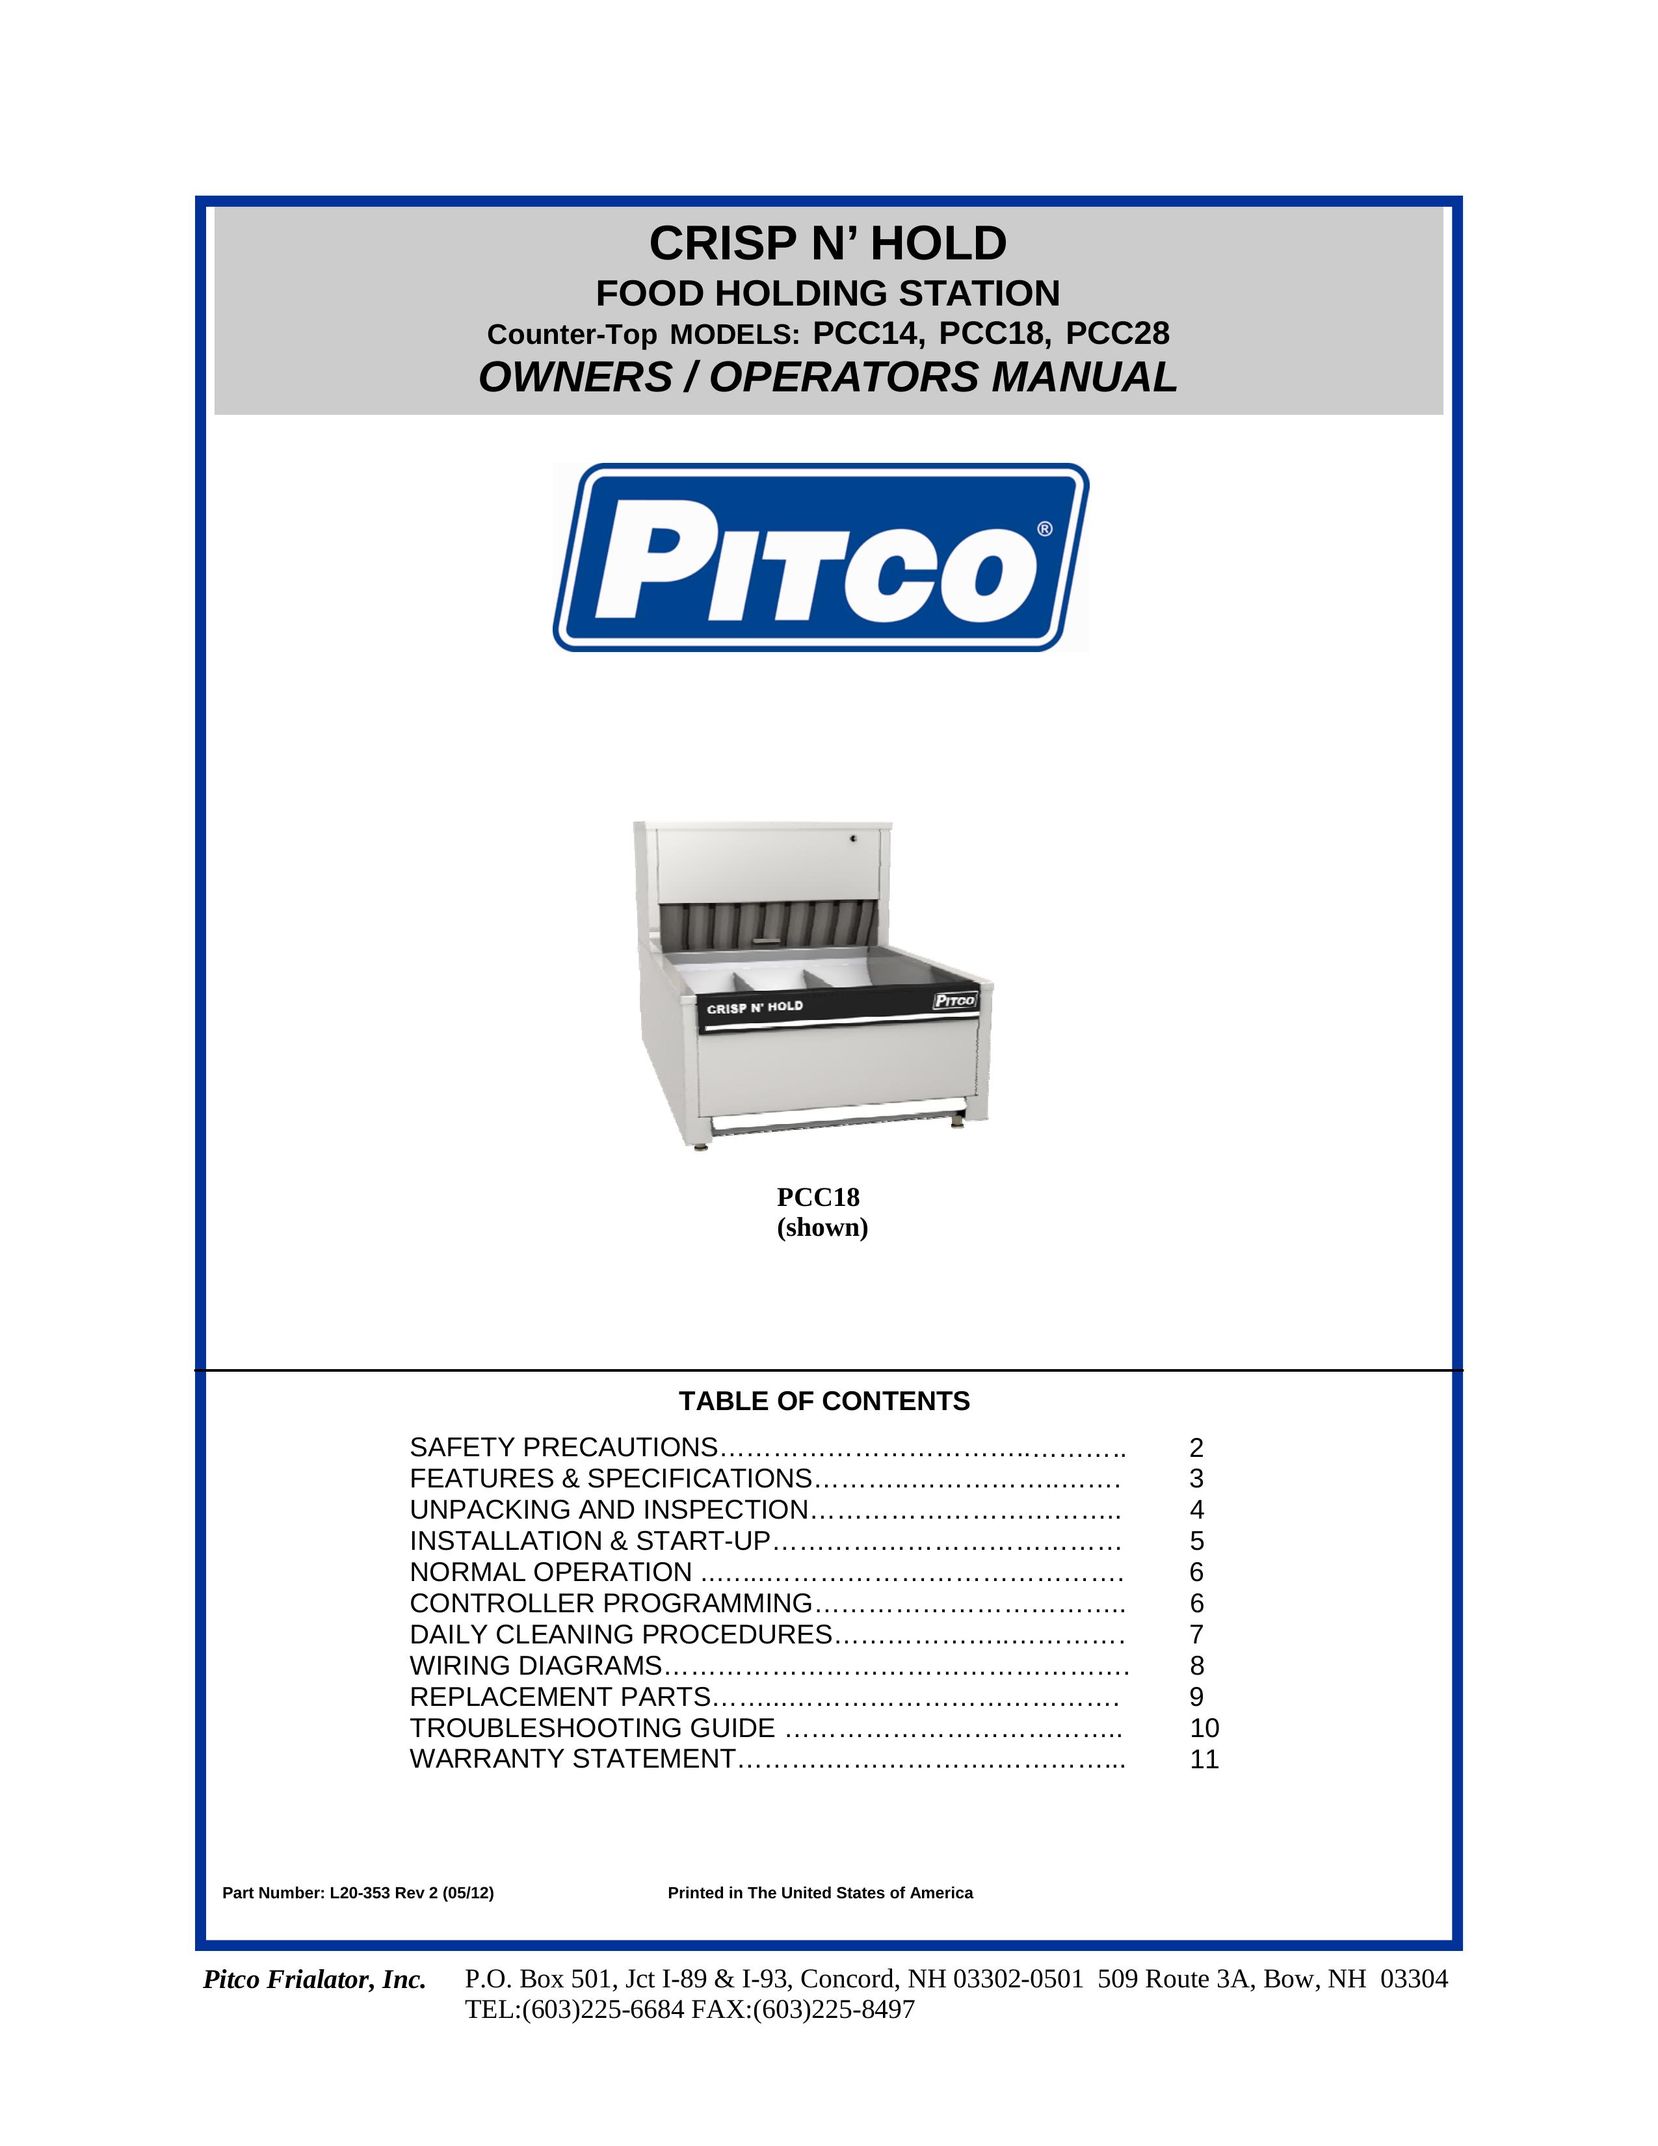 Pitco Frialator PCC18 Mixer User Manual